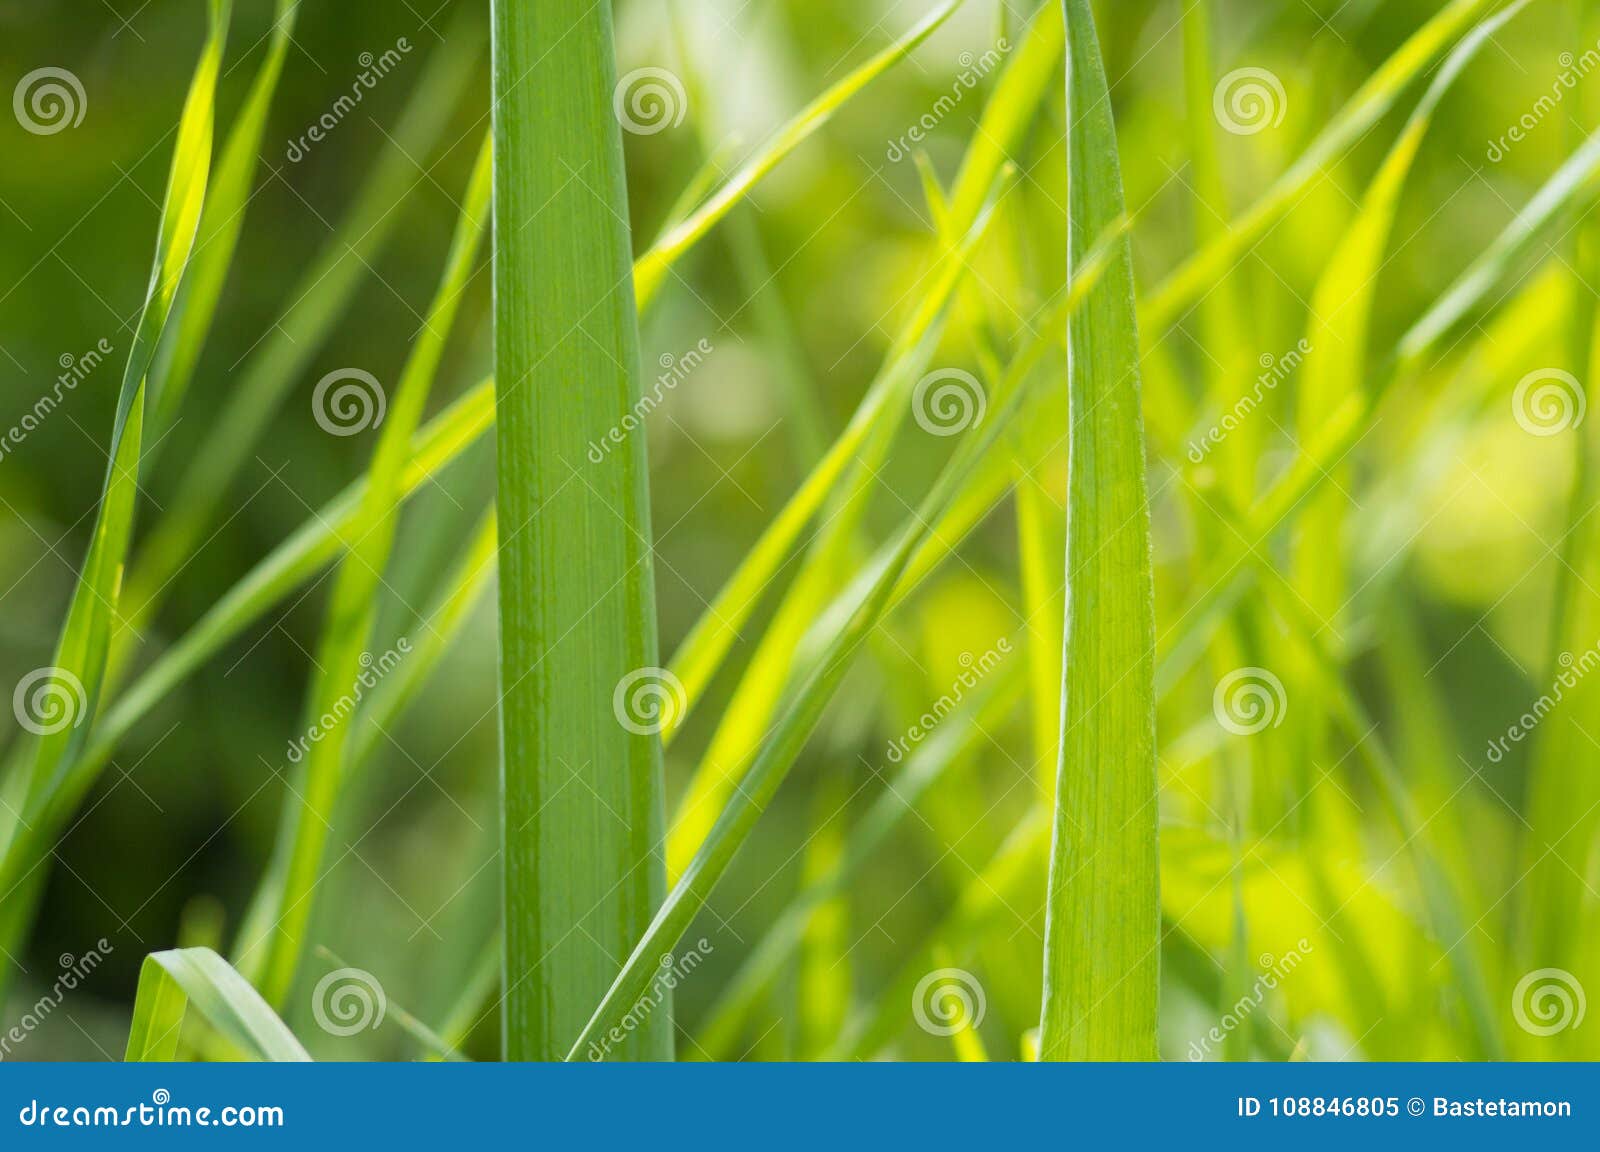 beautiful green grass background